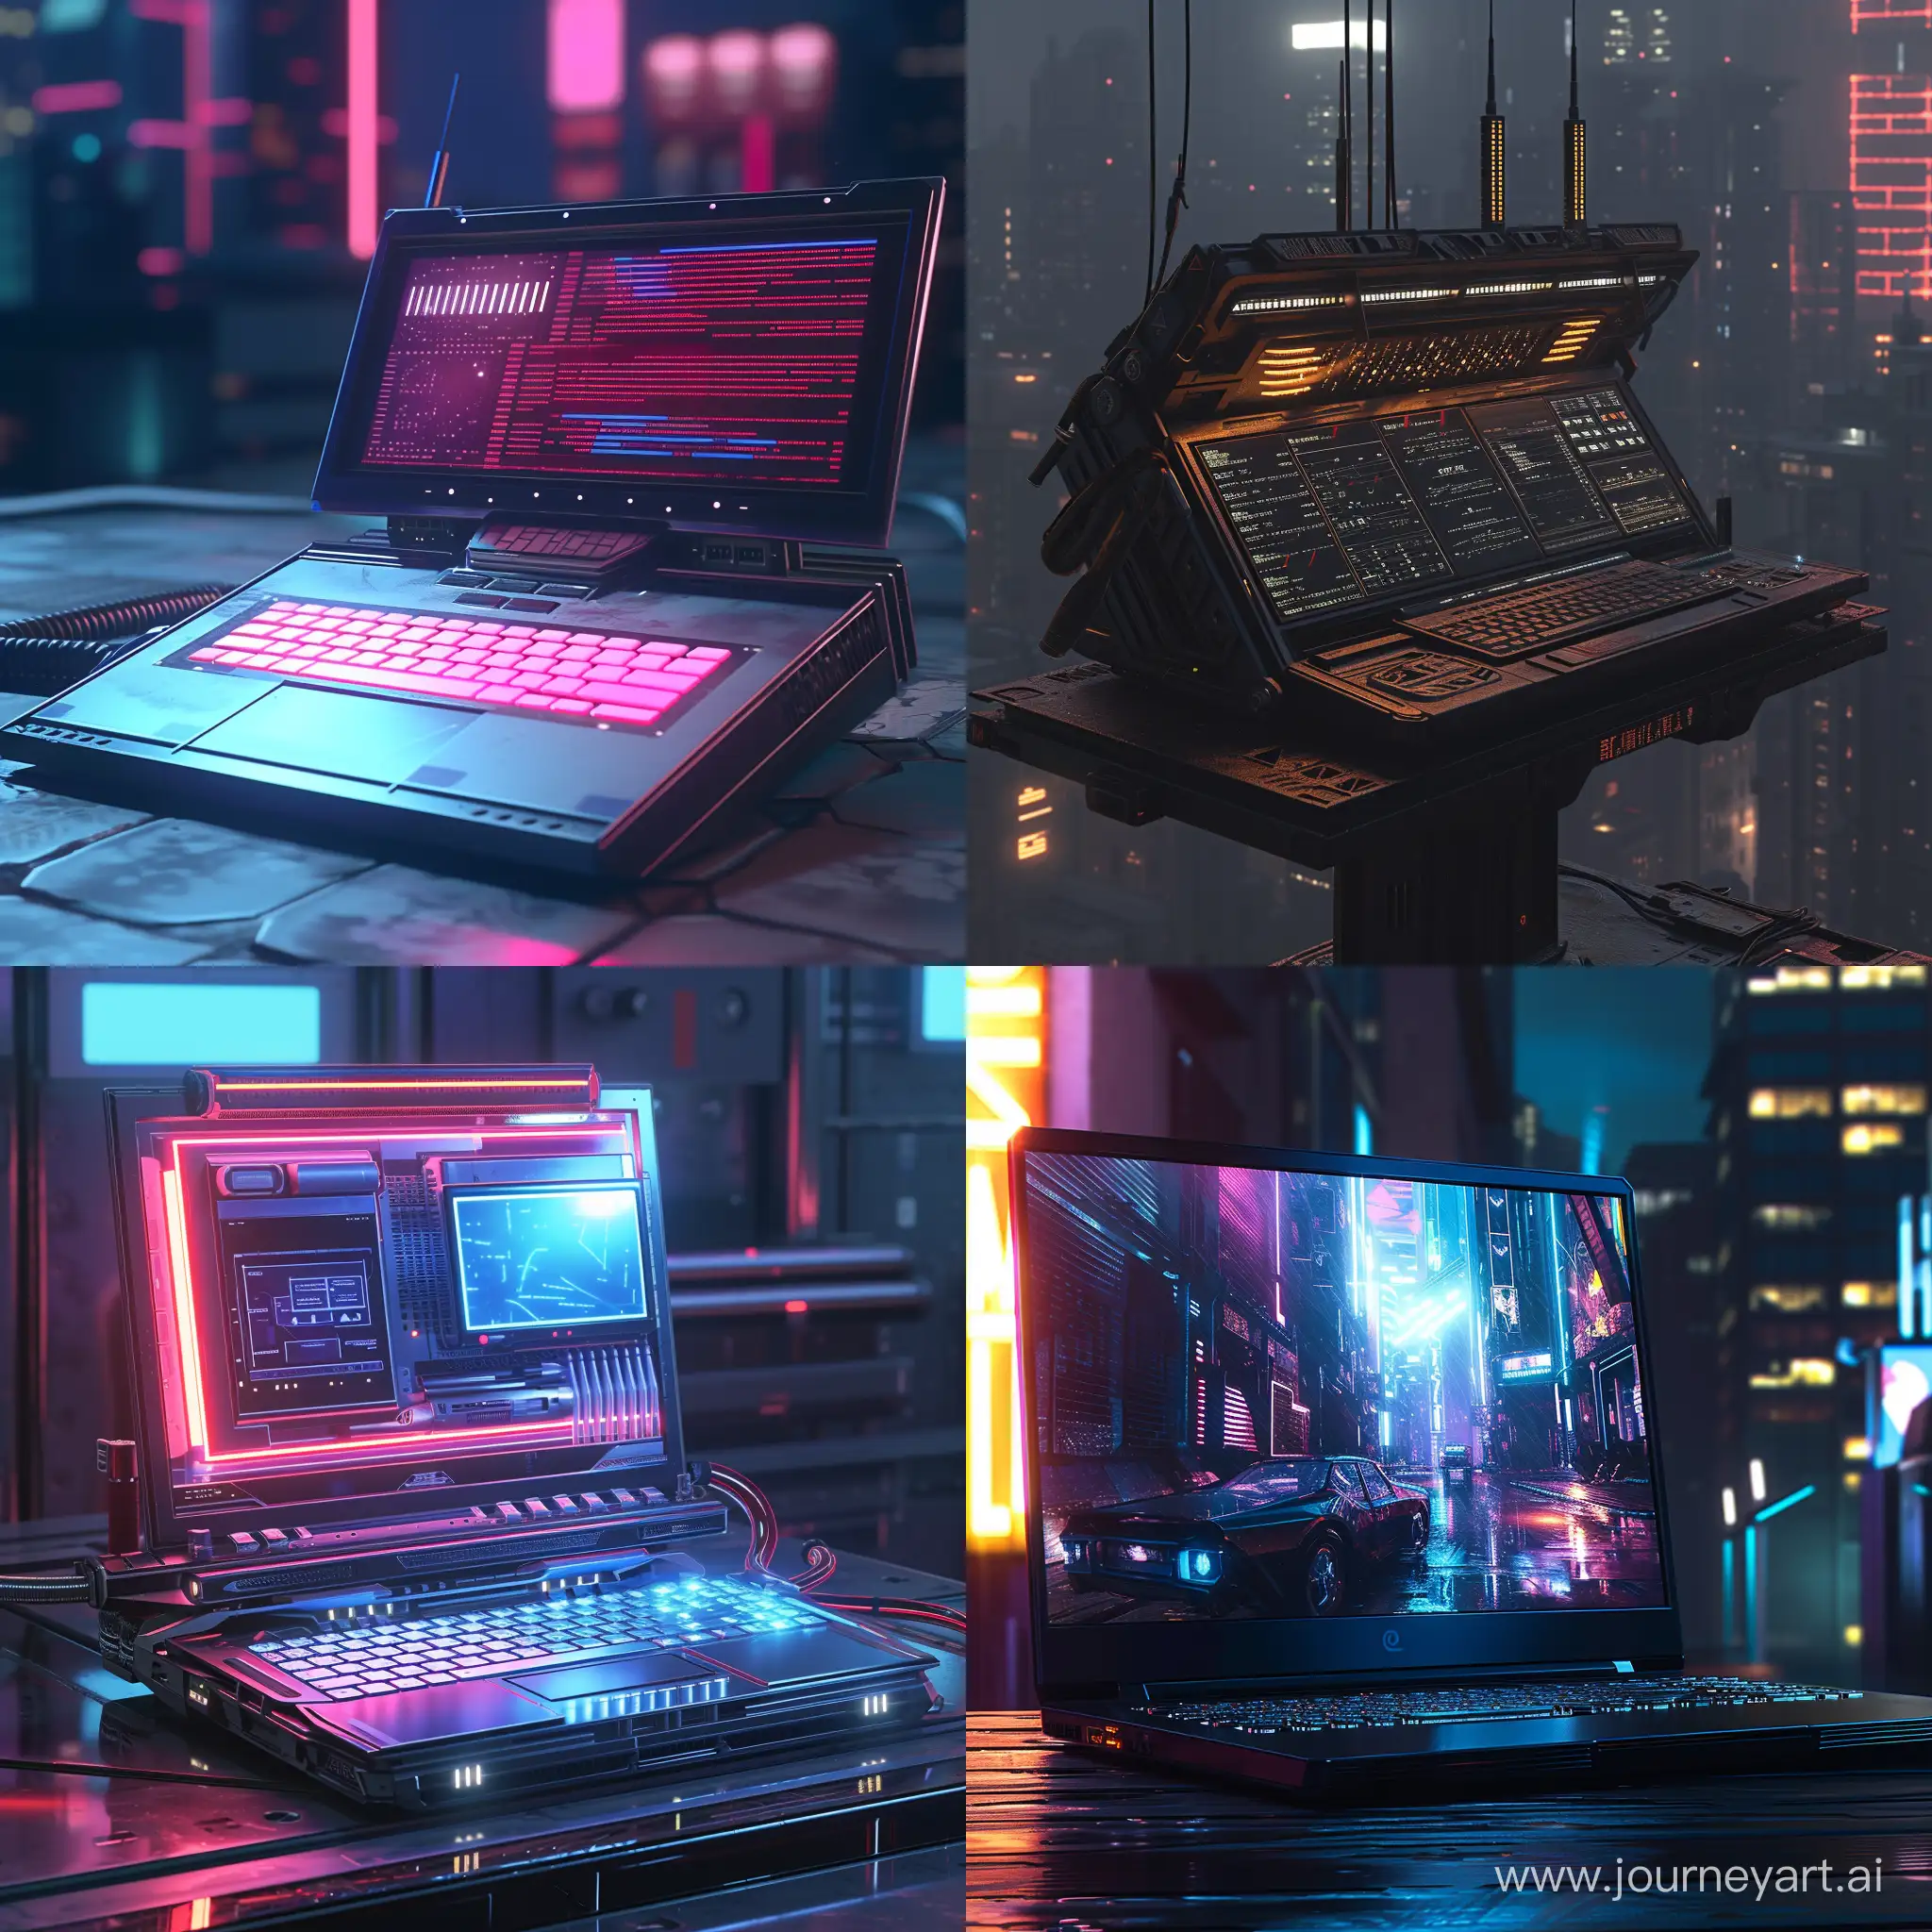 Postcyberpunk laptop, in cinematic style